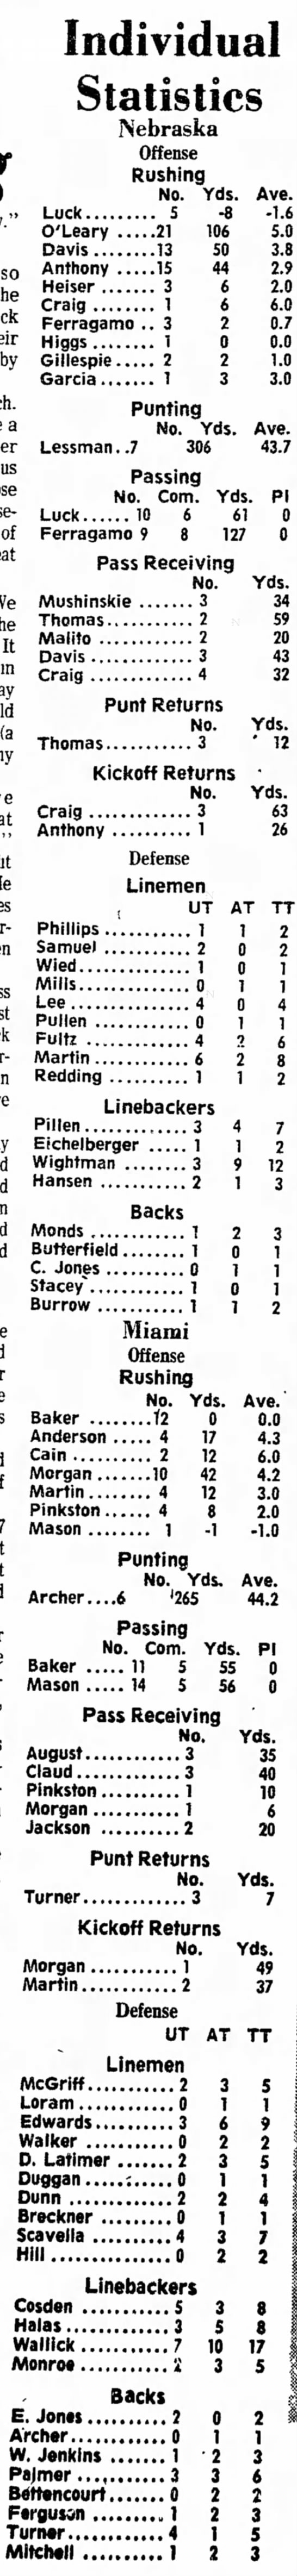 1975 Nebraska-Miami football game stats - 